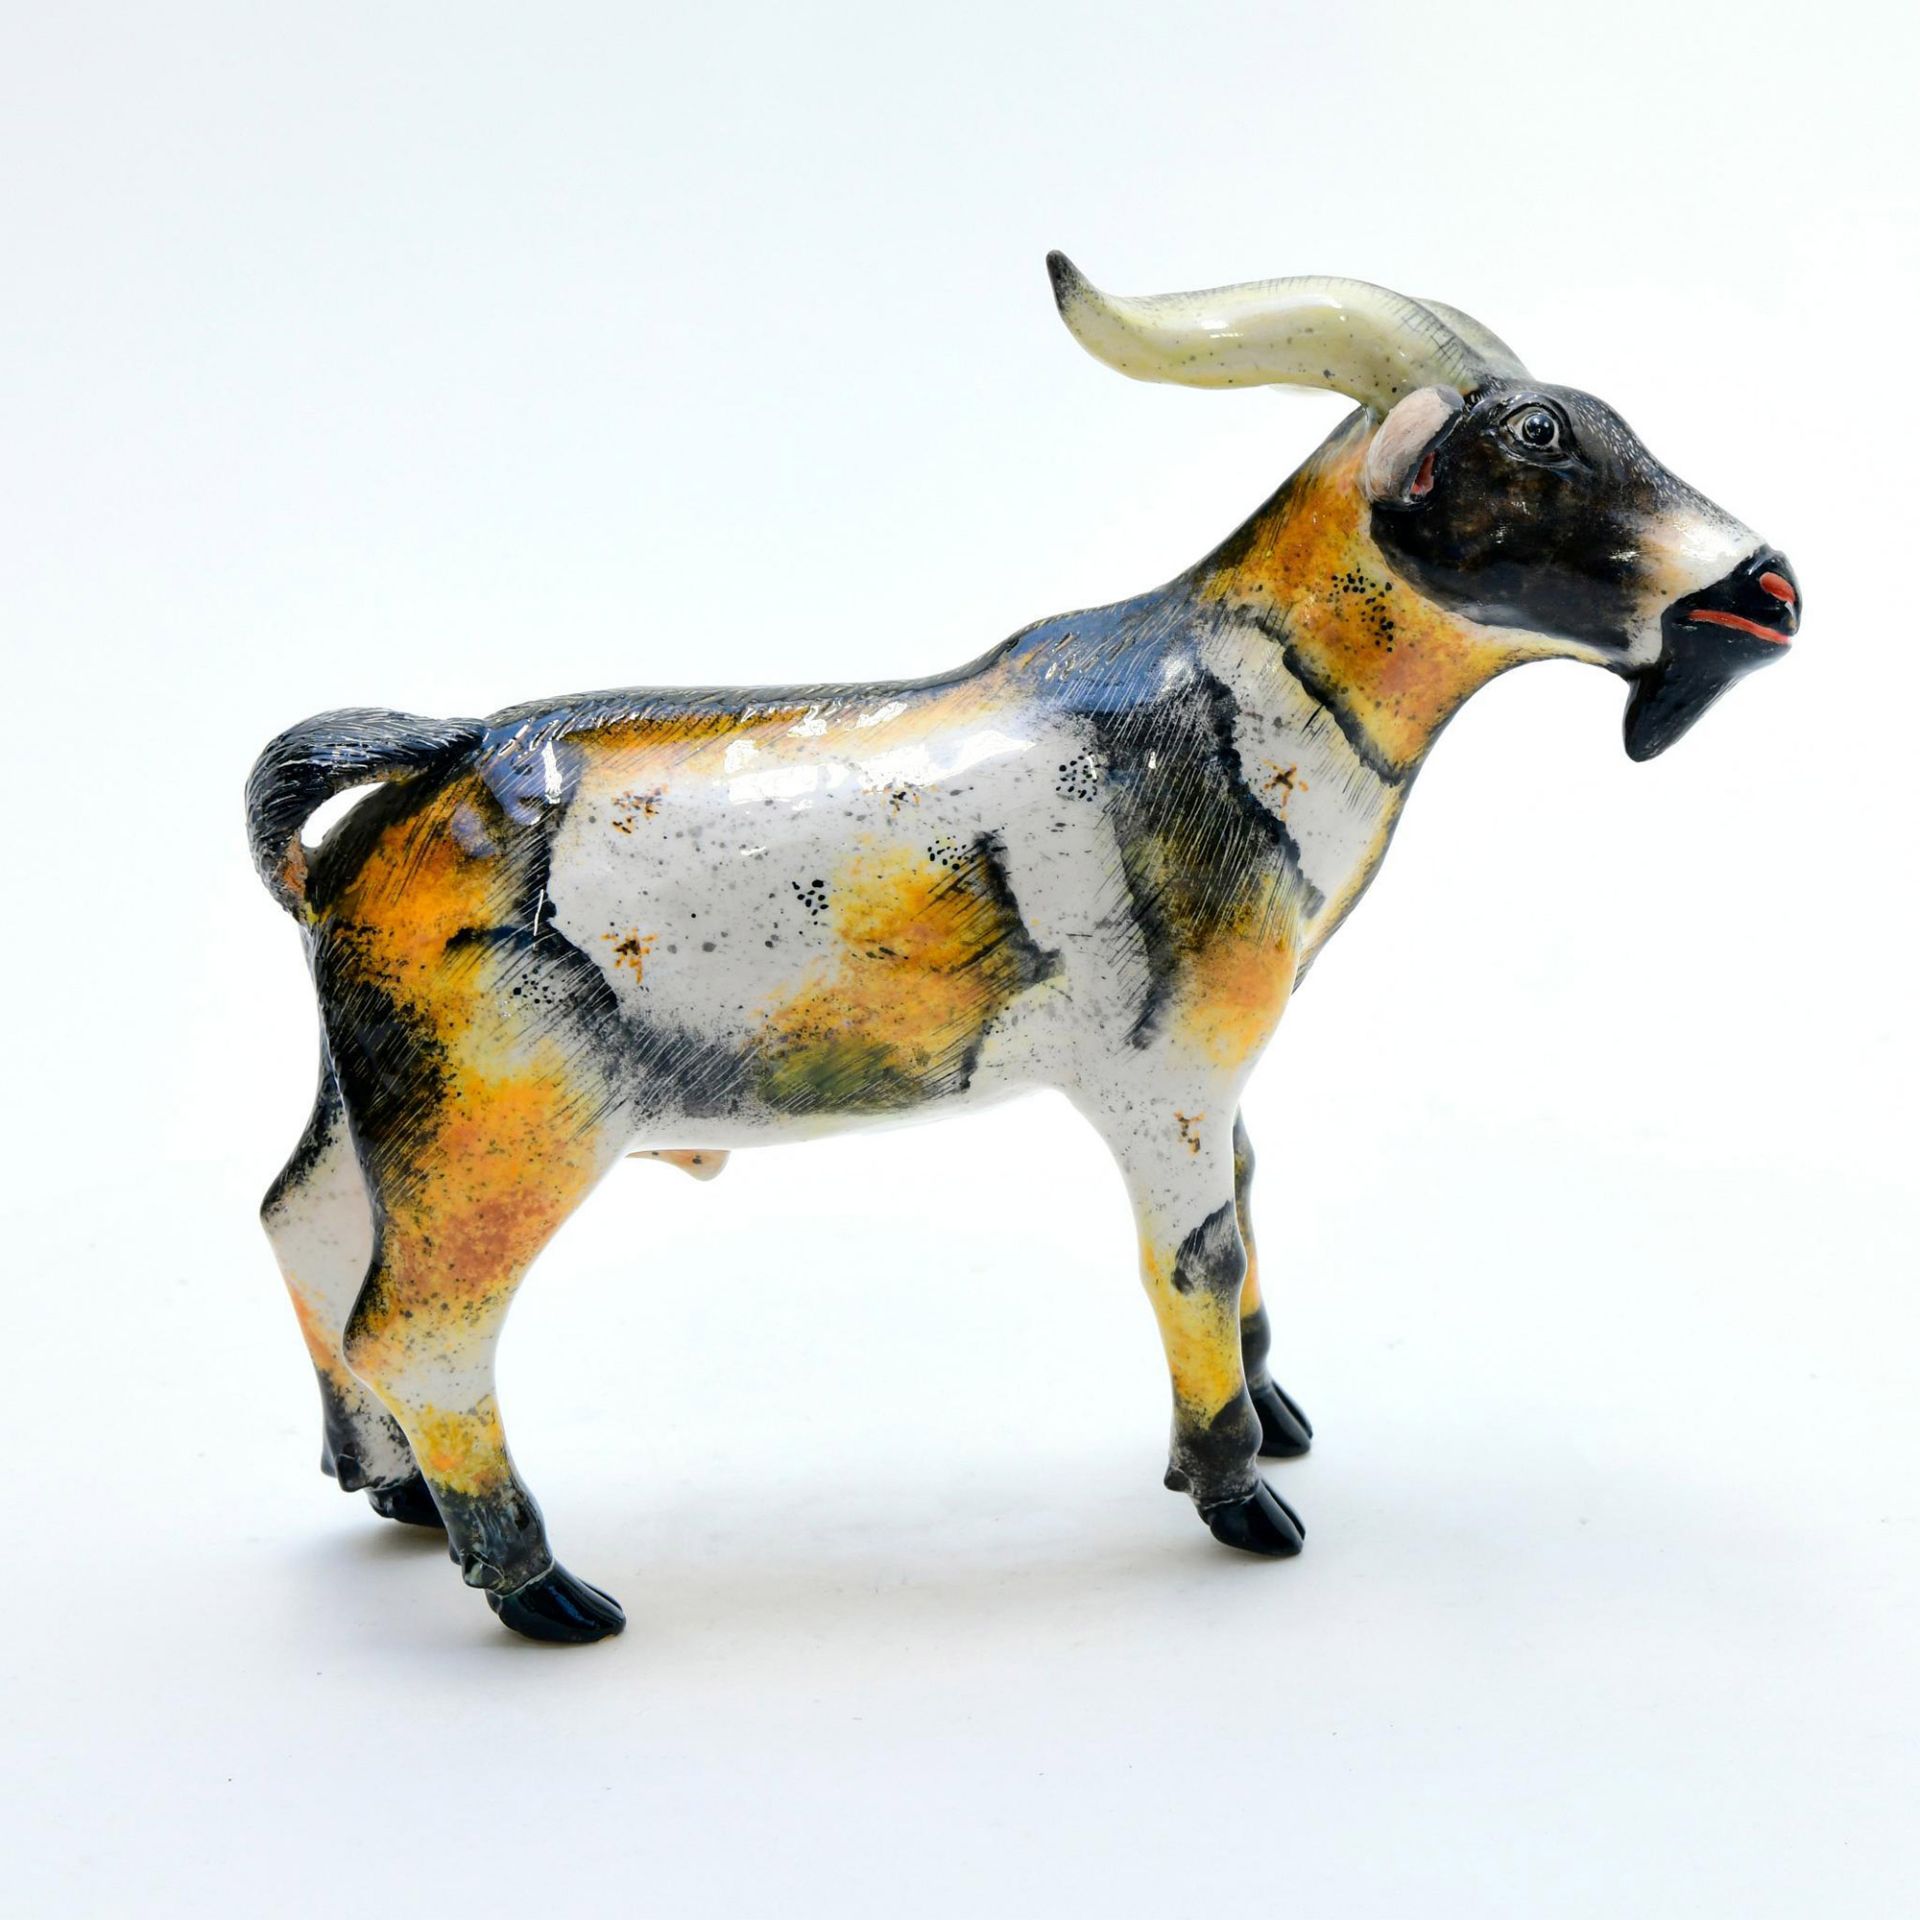 Goat Sculpture by Ardmore Ceramics - Image 2 of 5